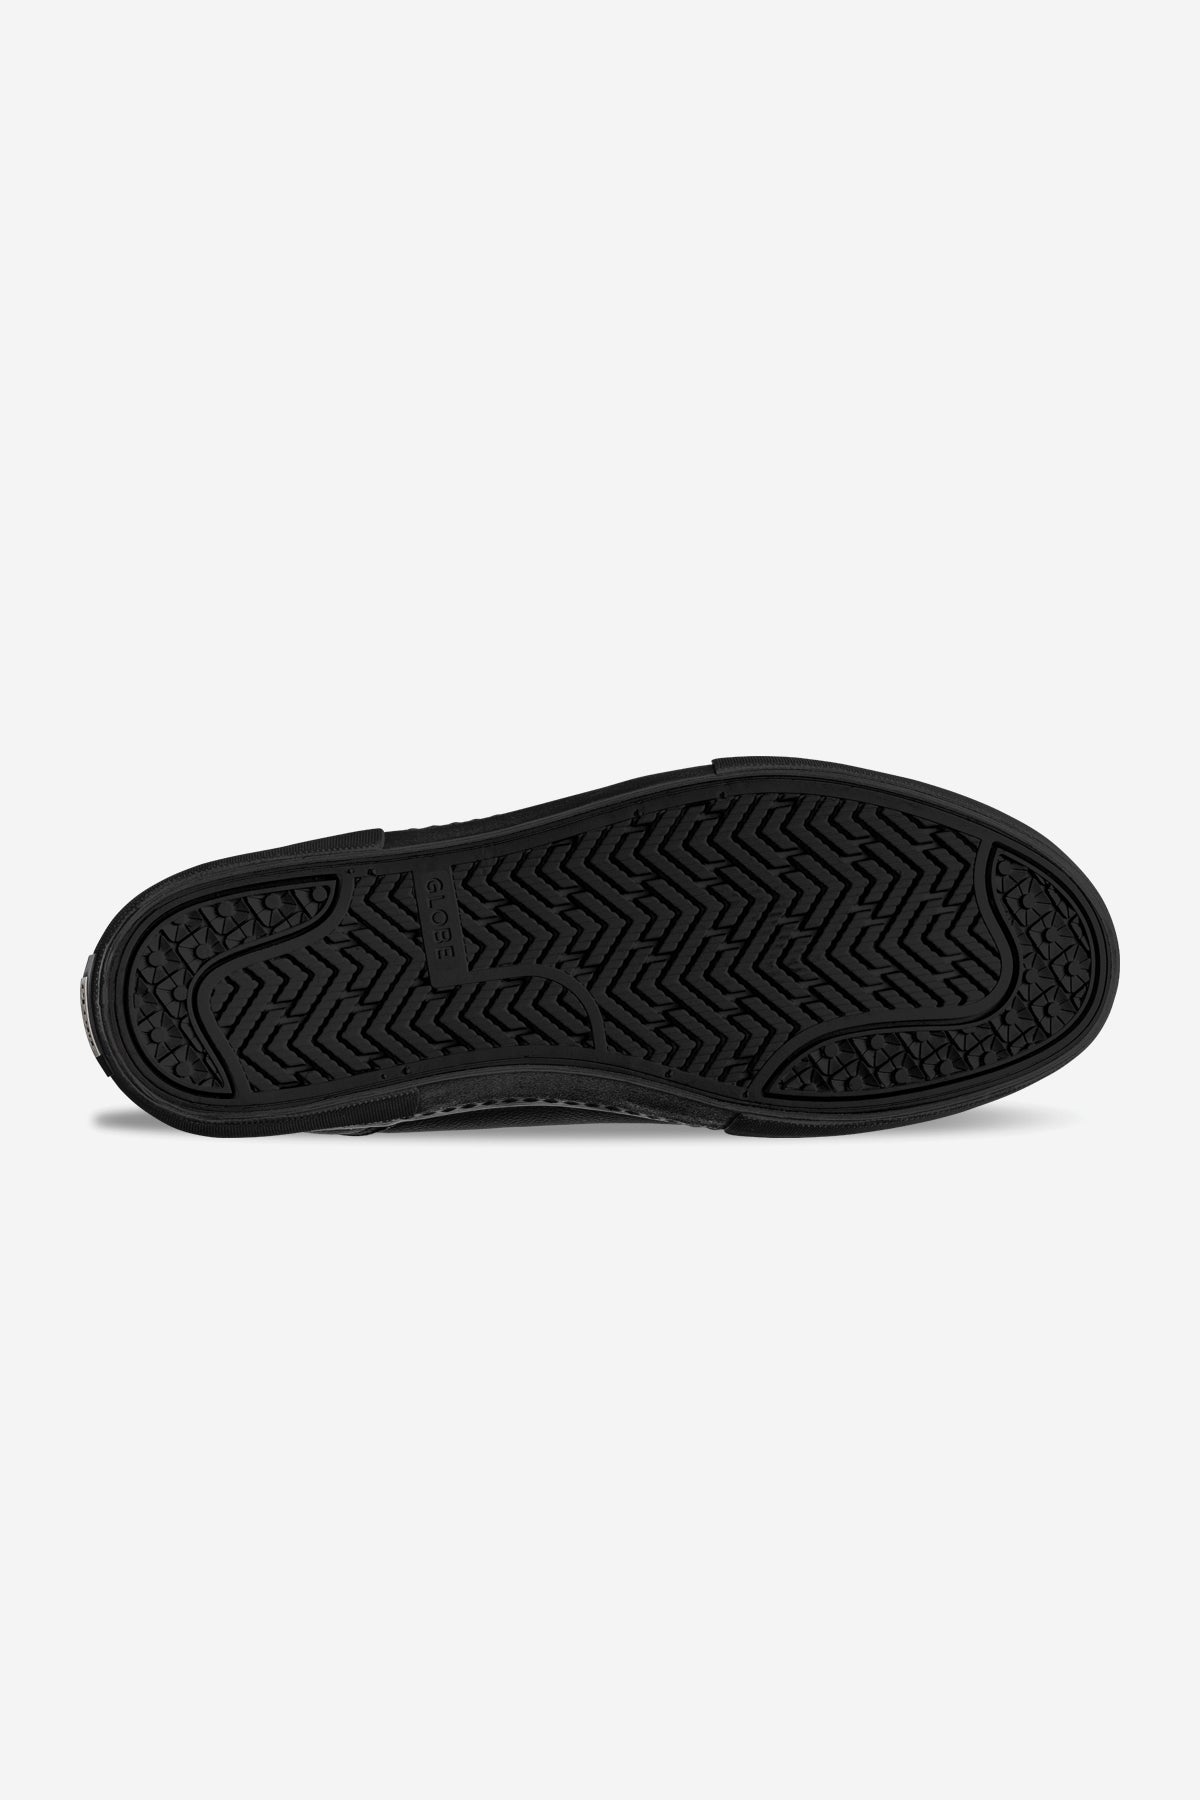 Shop Dover II - Black/Wasted Talent - Skate Shoes